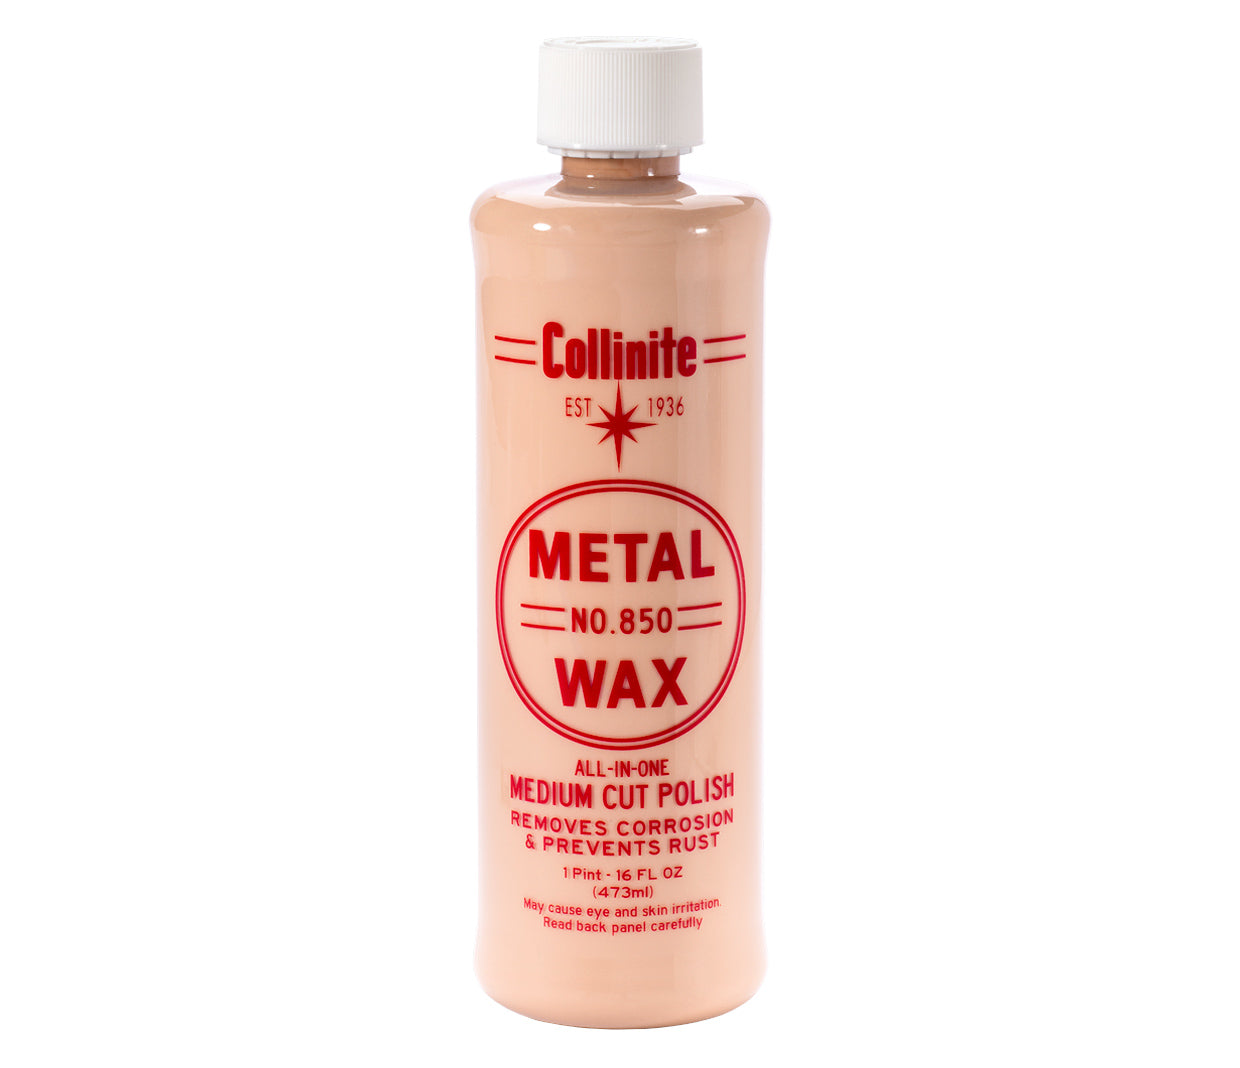 Collinite 850 Metal Wax